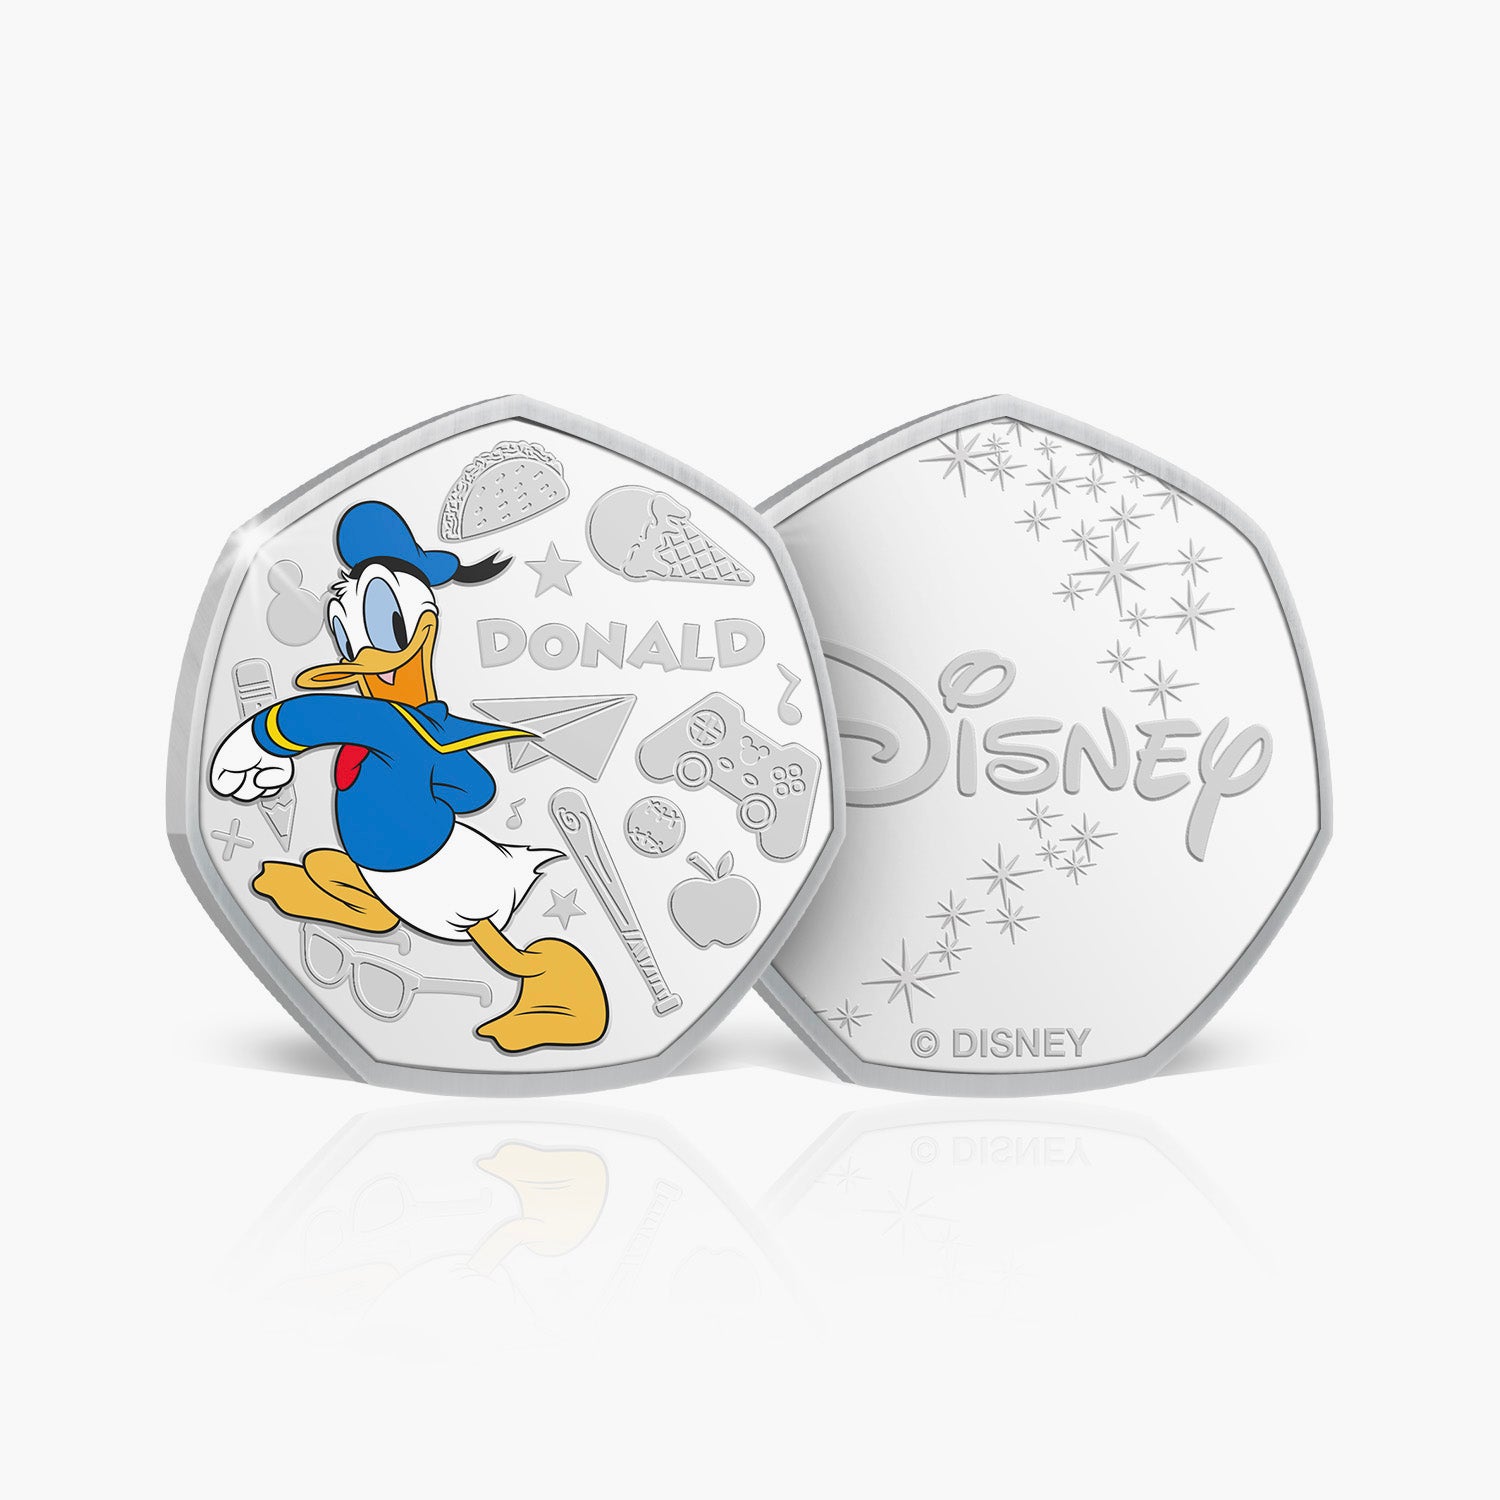 Donald Duck Silver Plated Commemorative